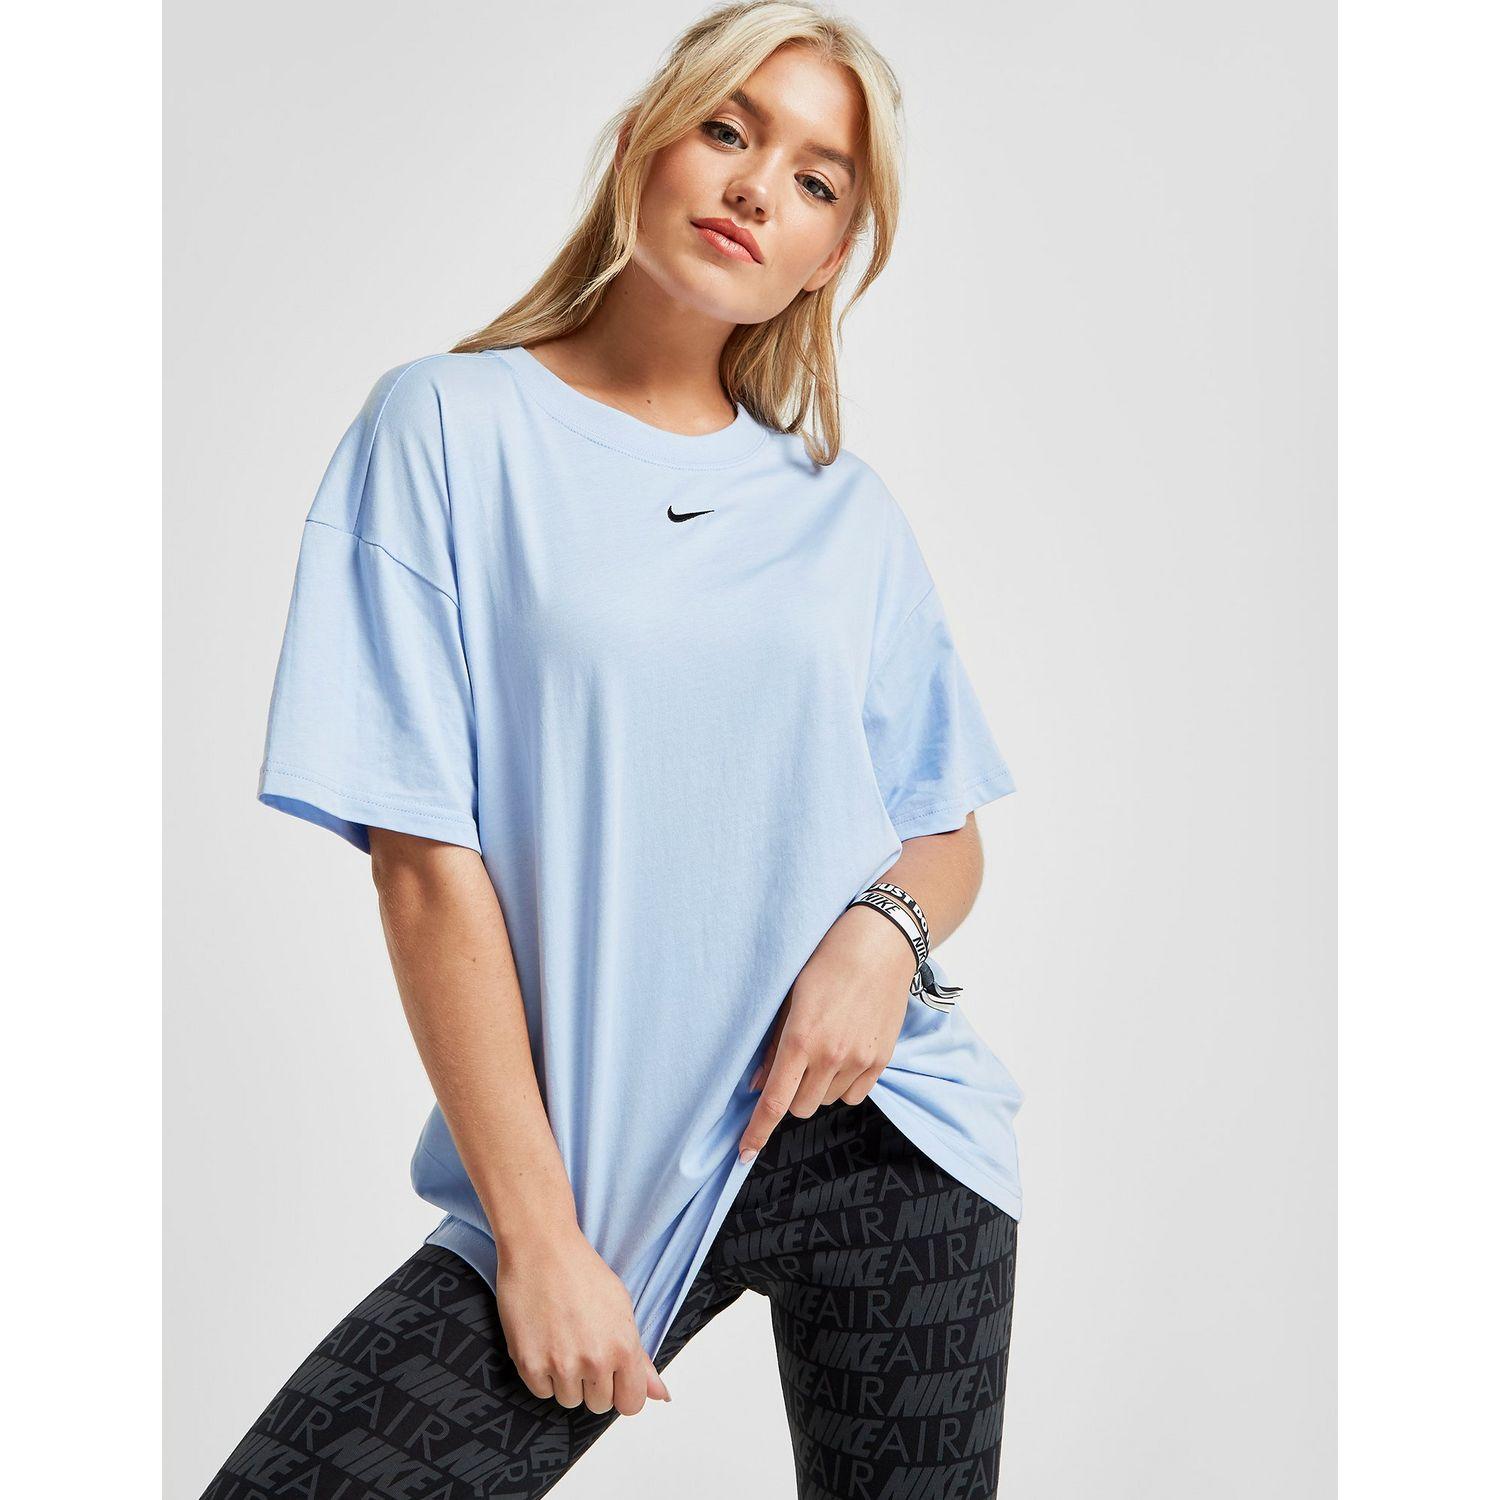 Nike Cotton Essential Boyfriend T-shirt in Blue/Black (Blue) - Lyst